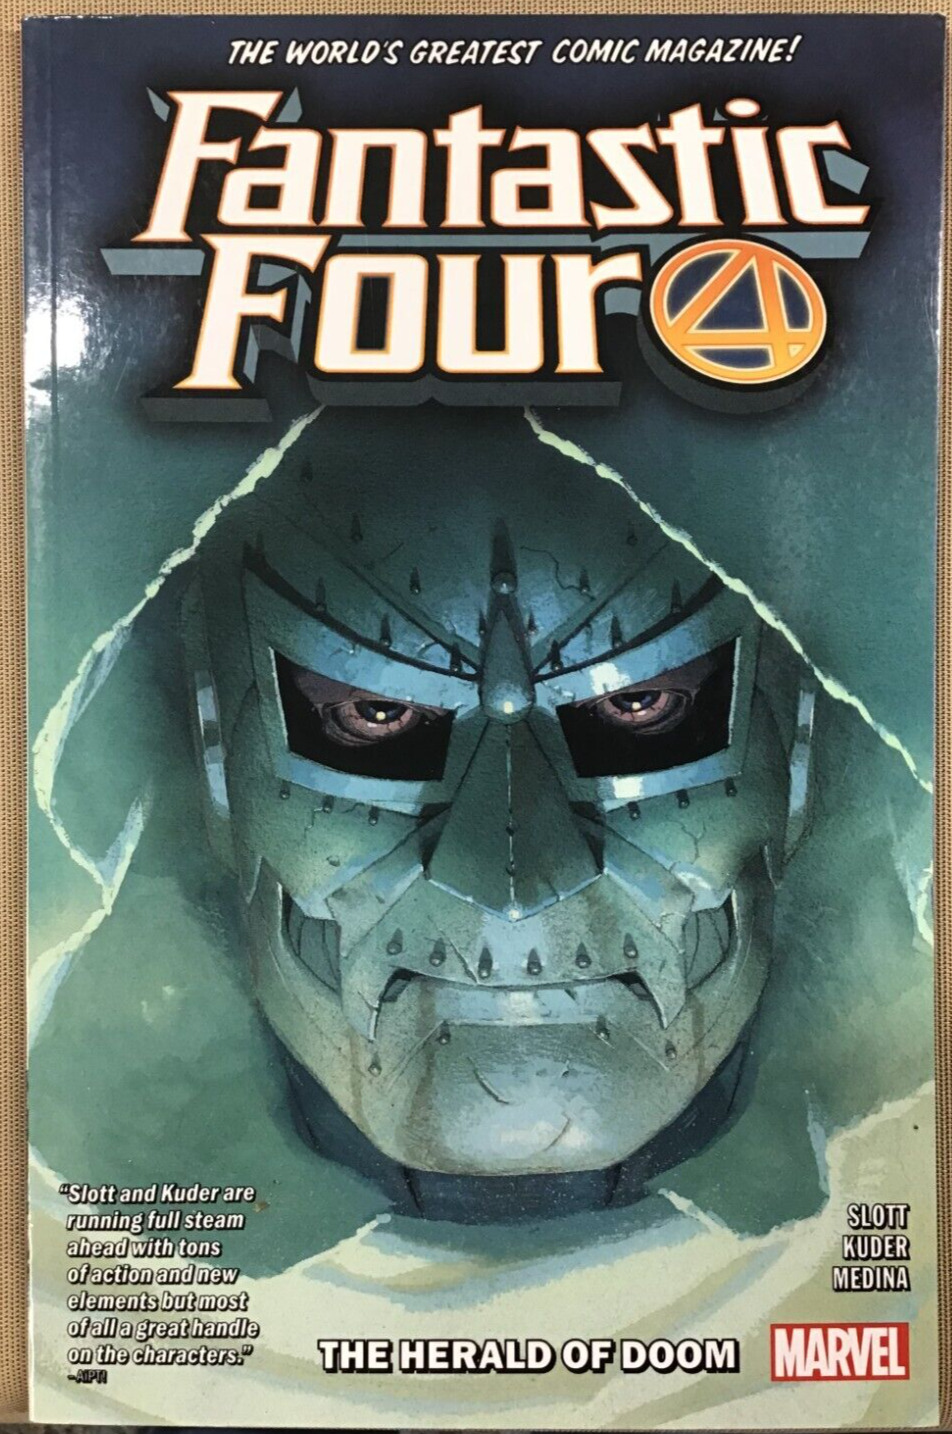 Marvel Fantastic Four by Dan Slott Vol. 3 - The Herald of Doom Paperback - NEW